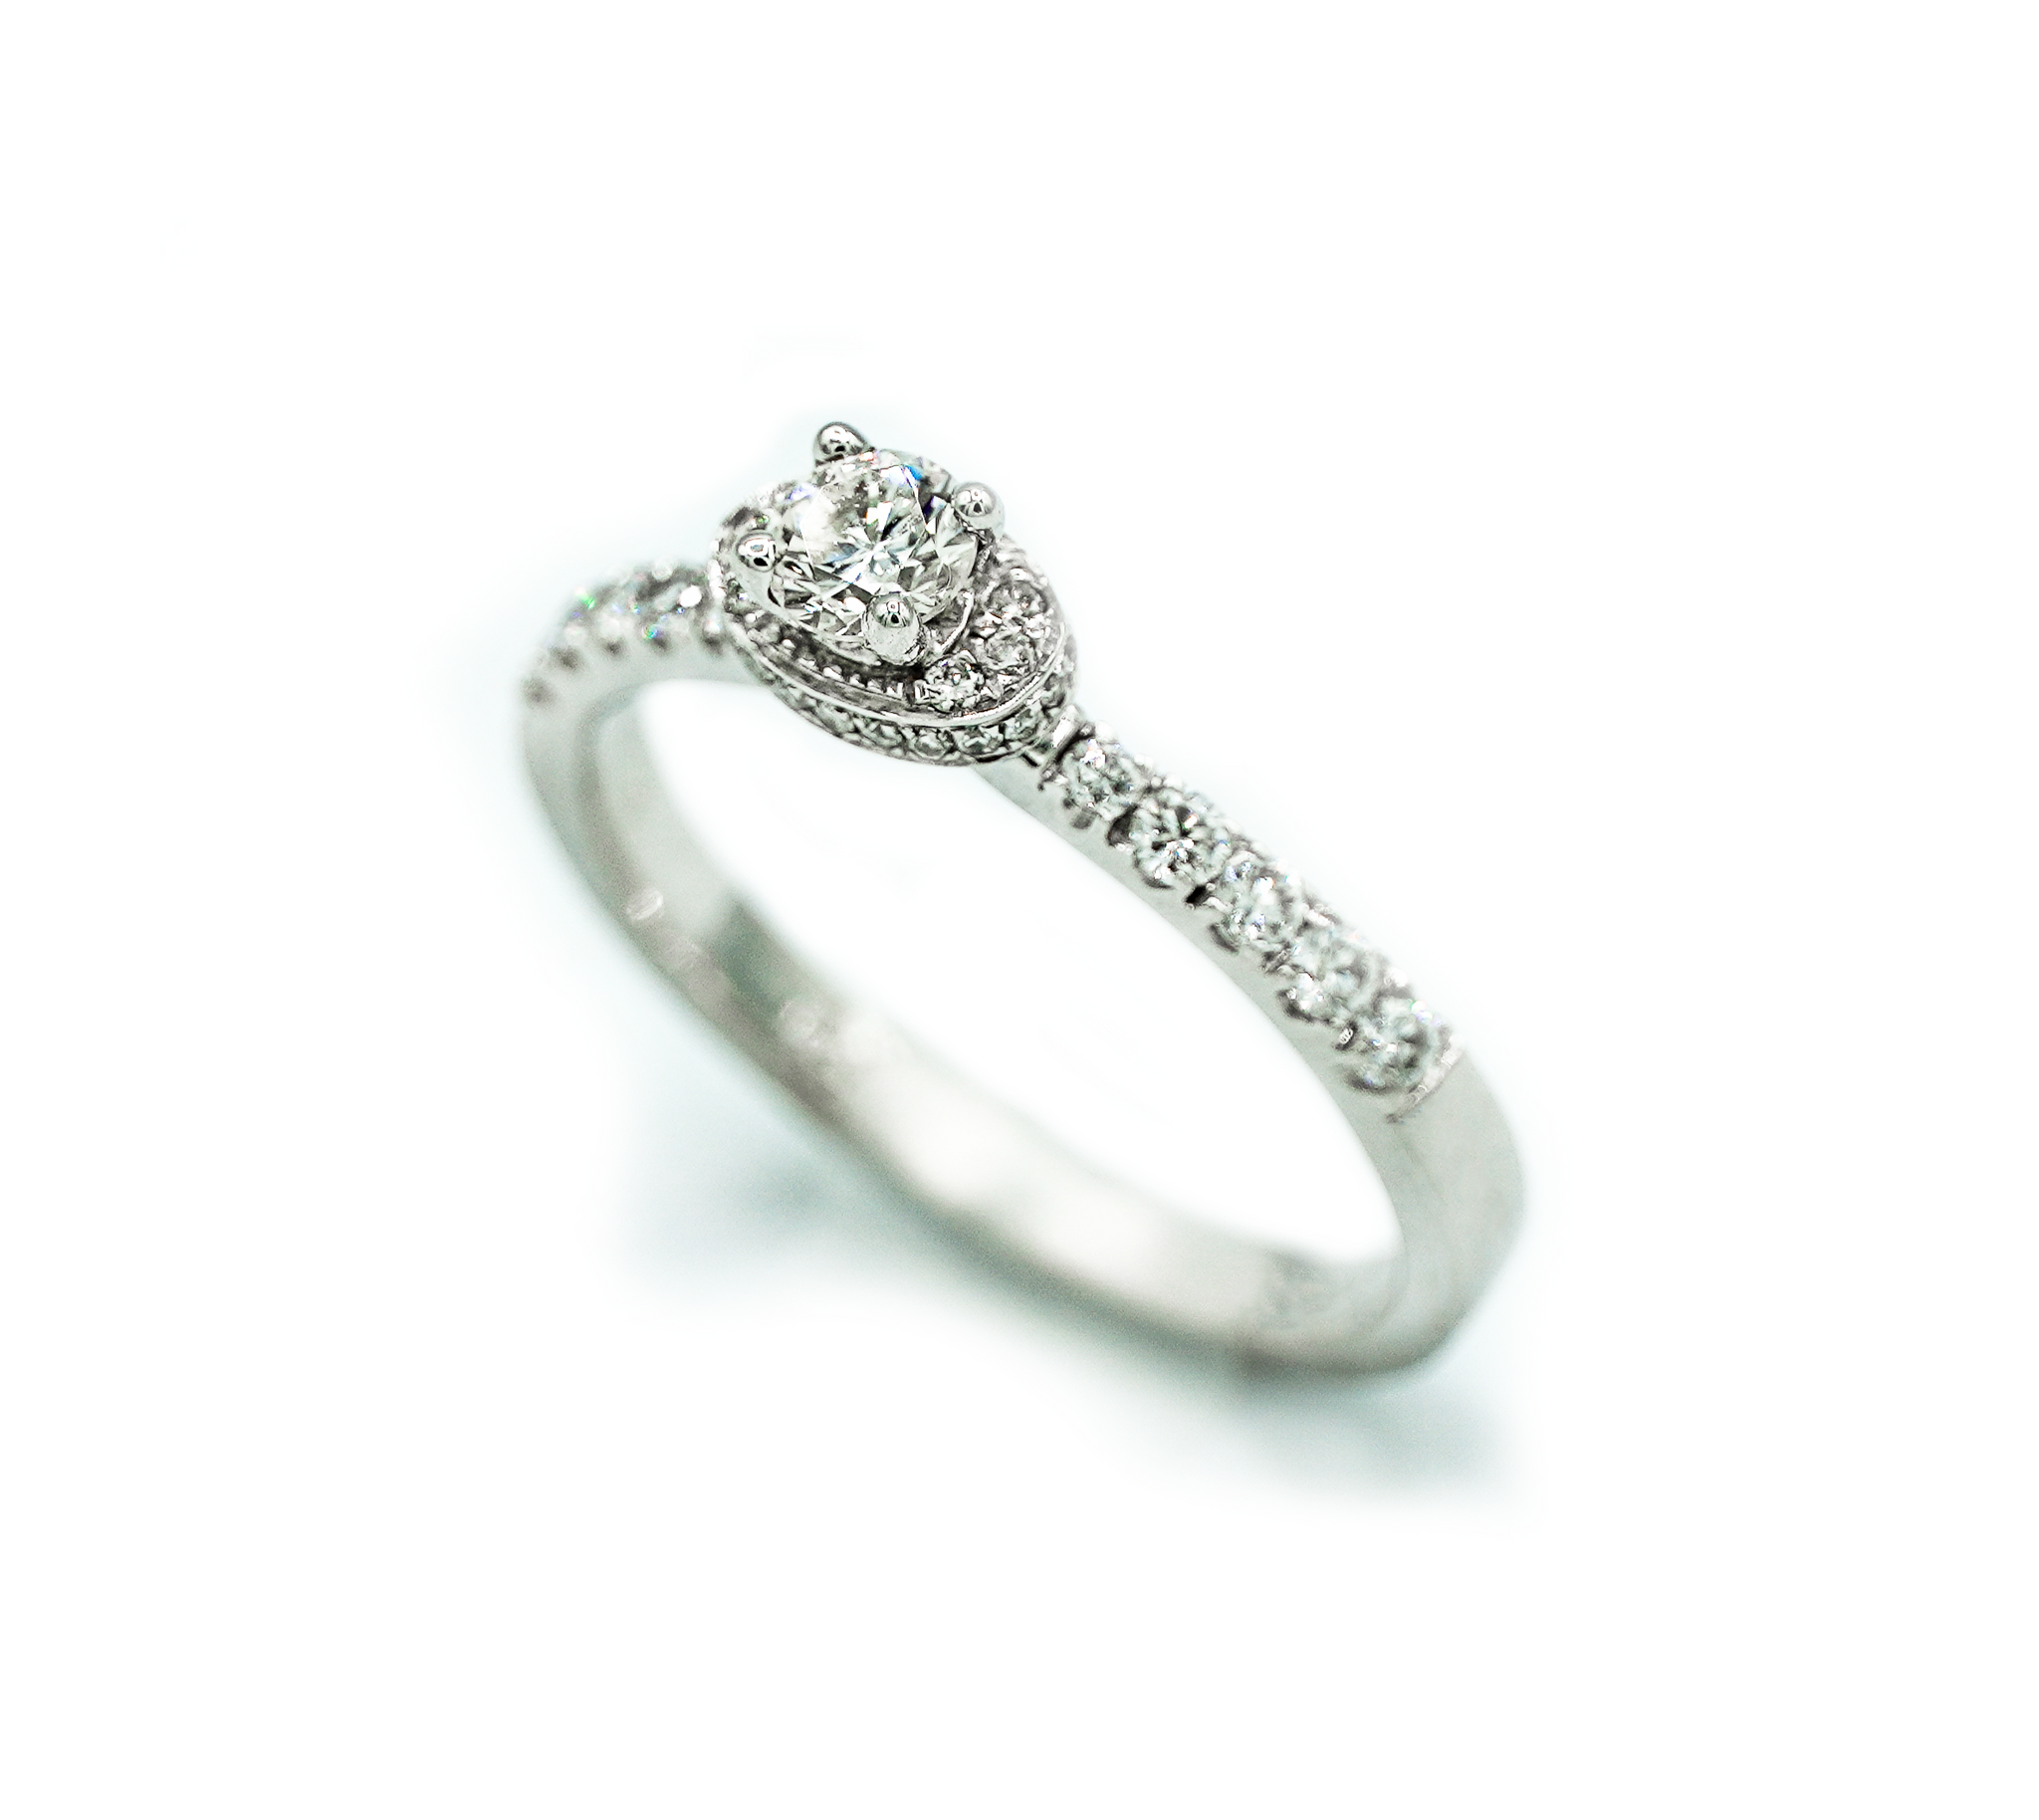 Montalvo Diamonds - Round Brilliant Cut Ring in 14kt White Gold